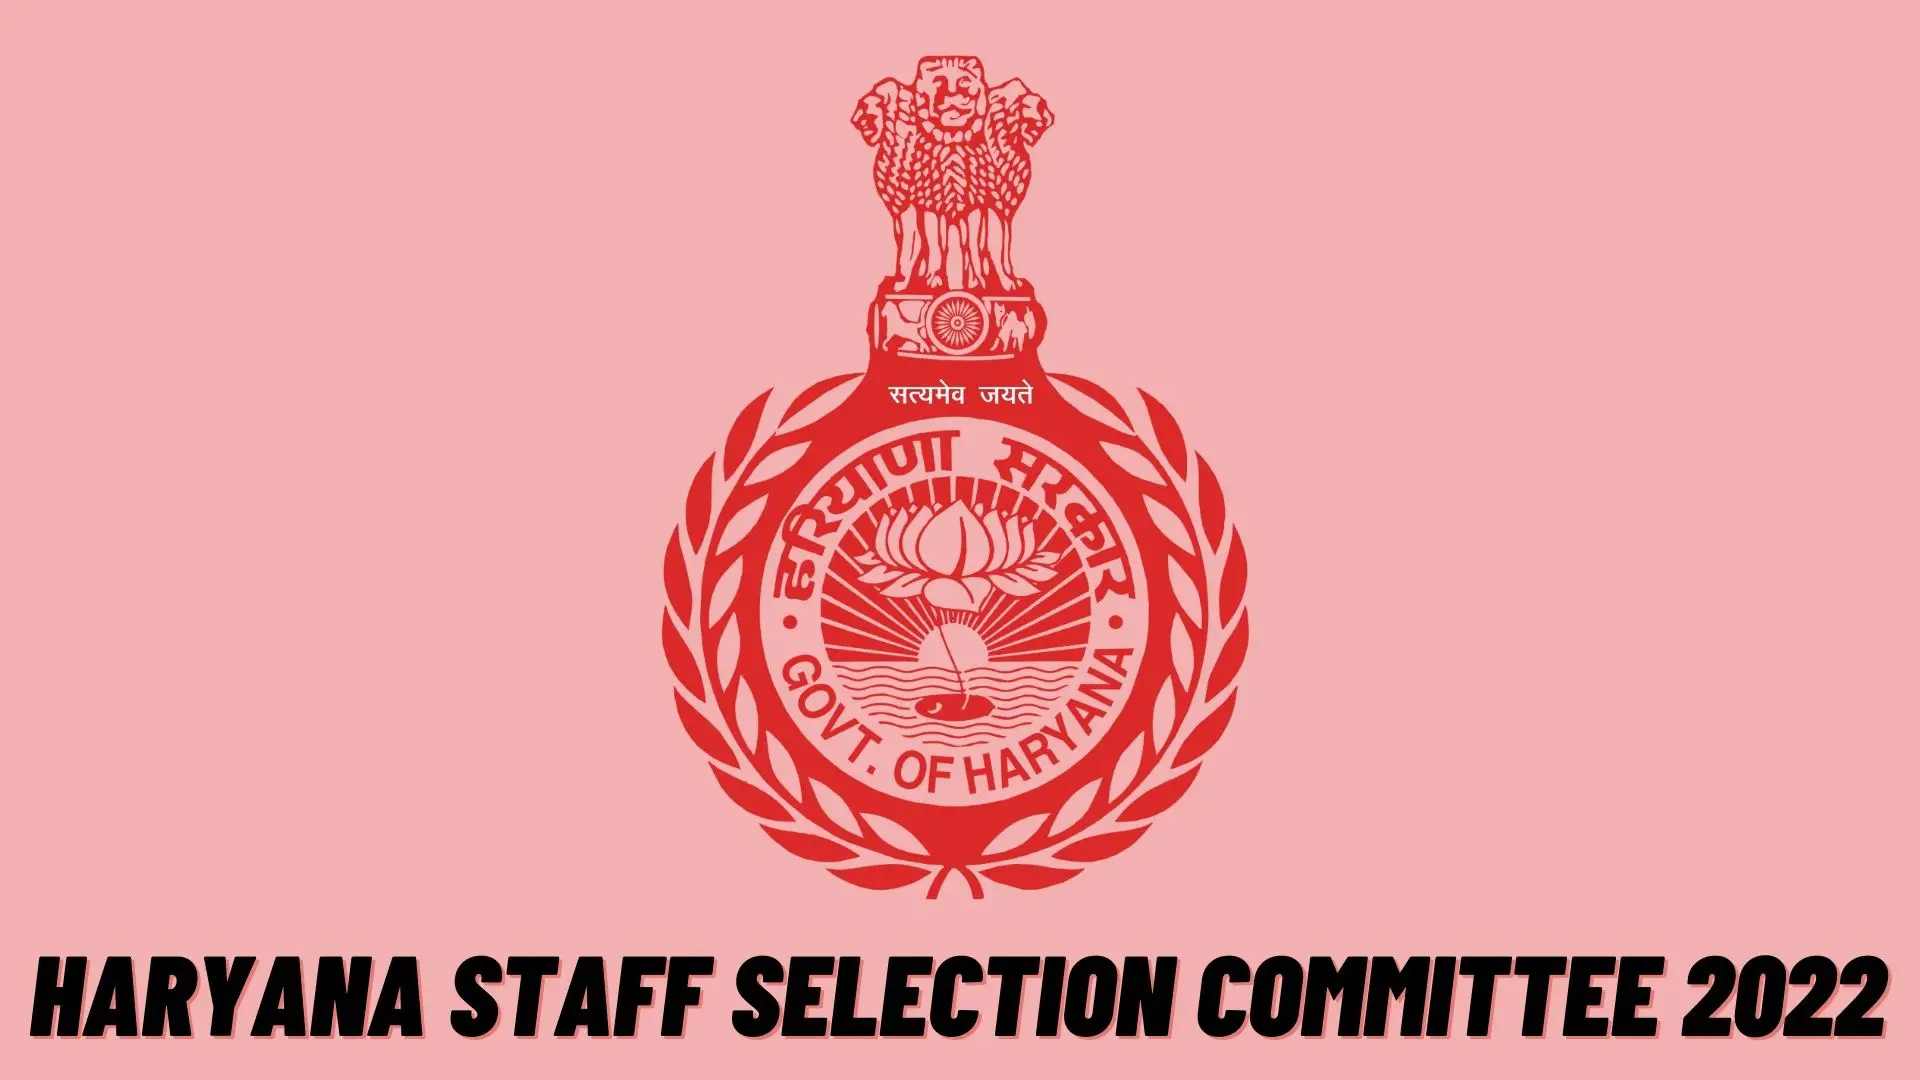 Haryana Staff Selection Committee 2022